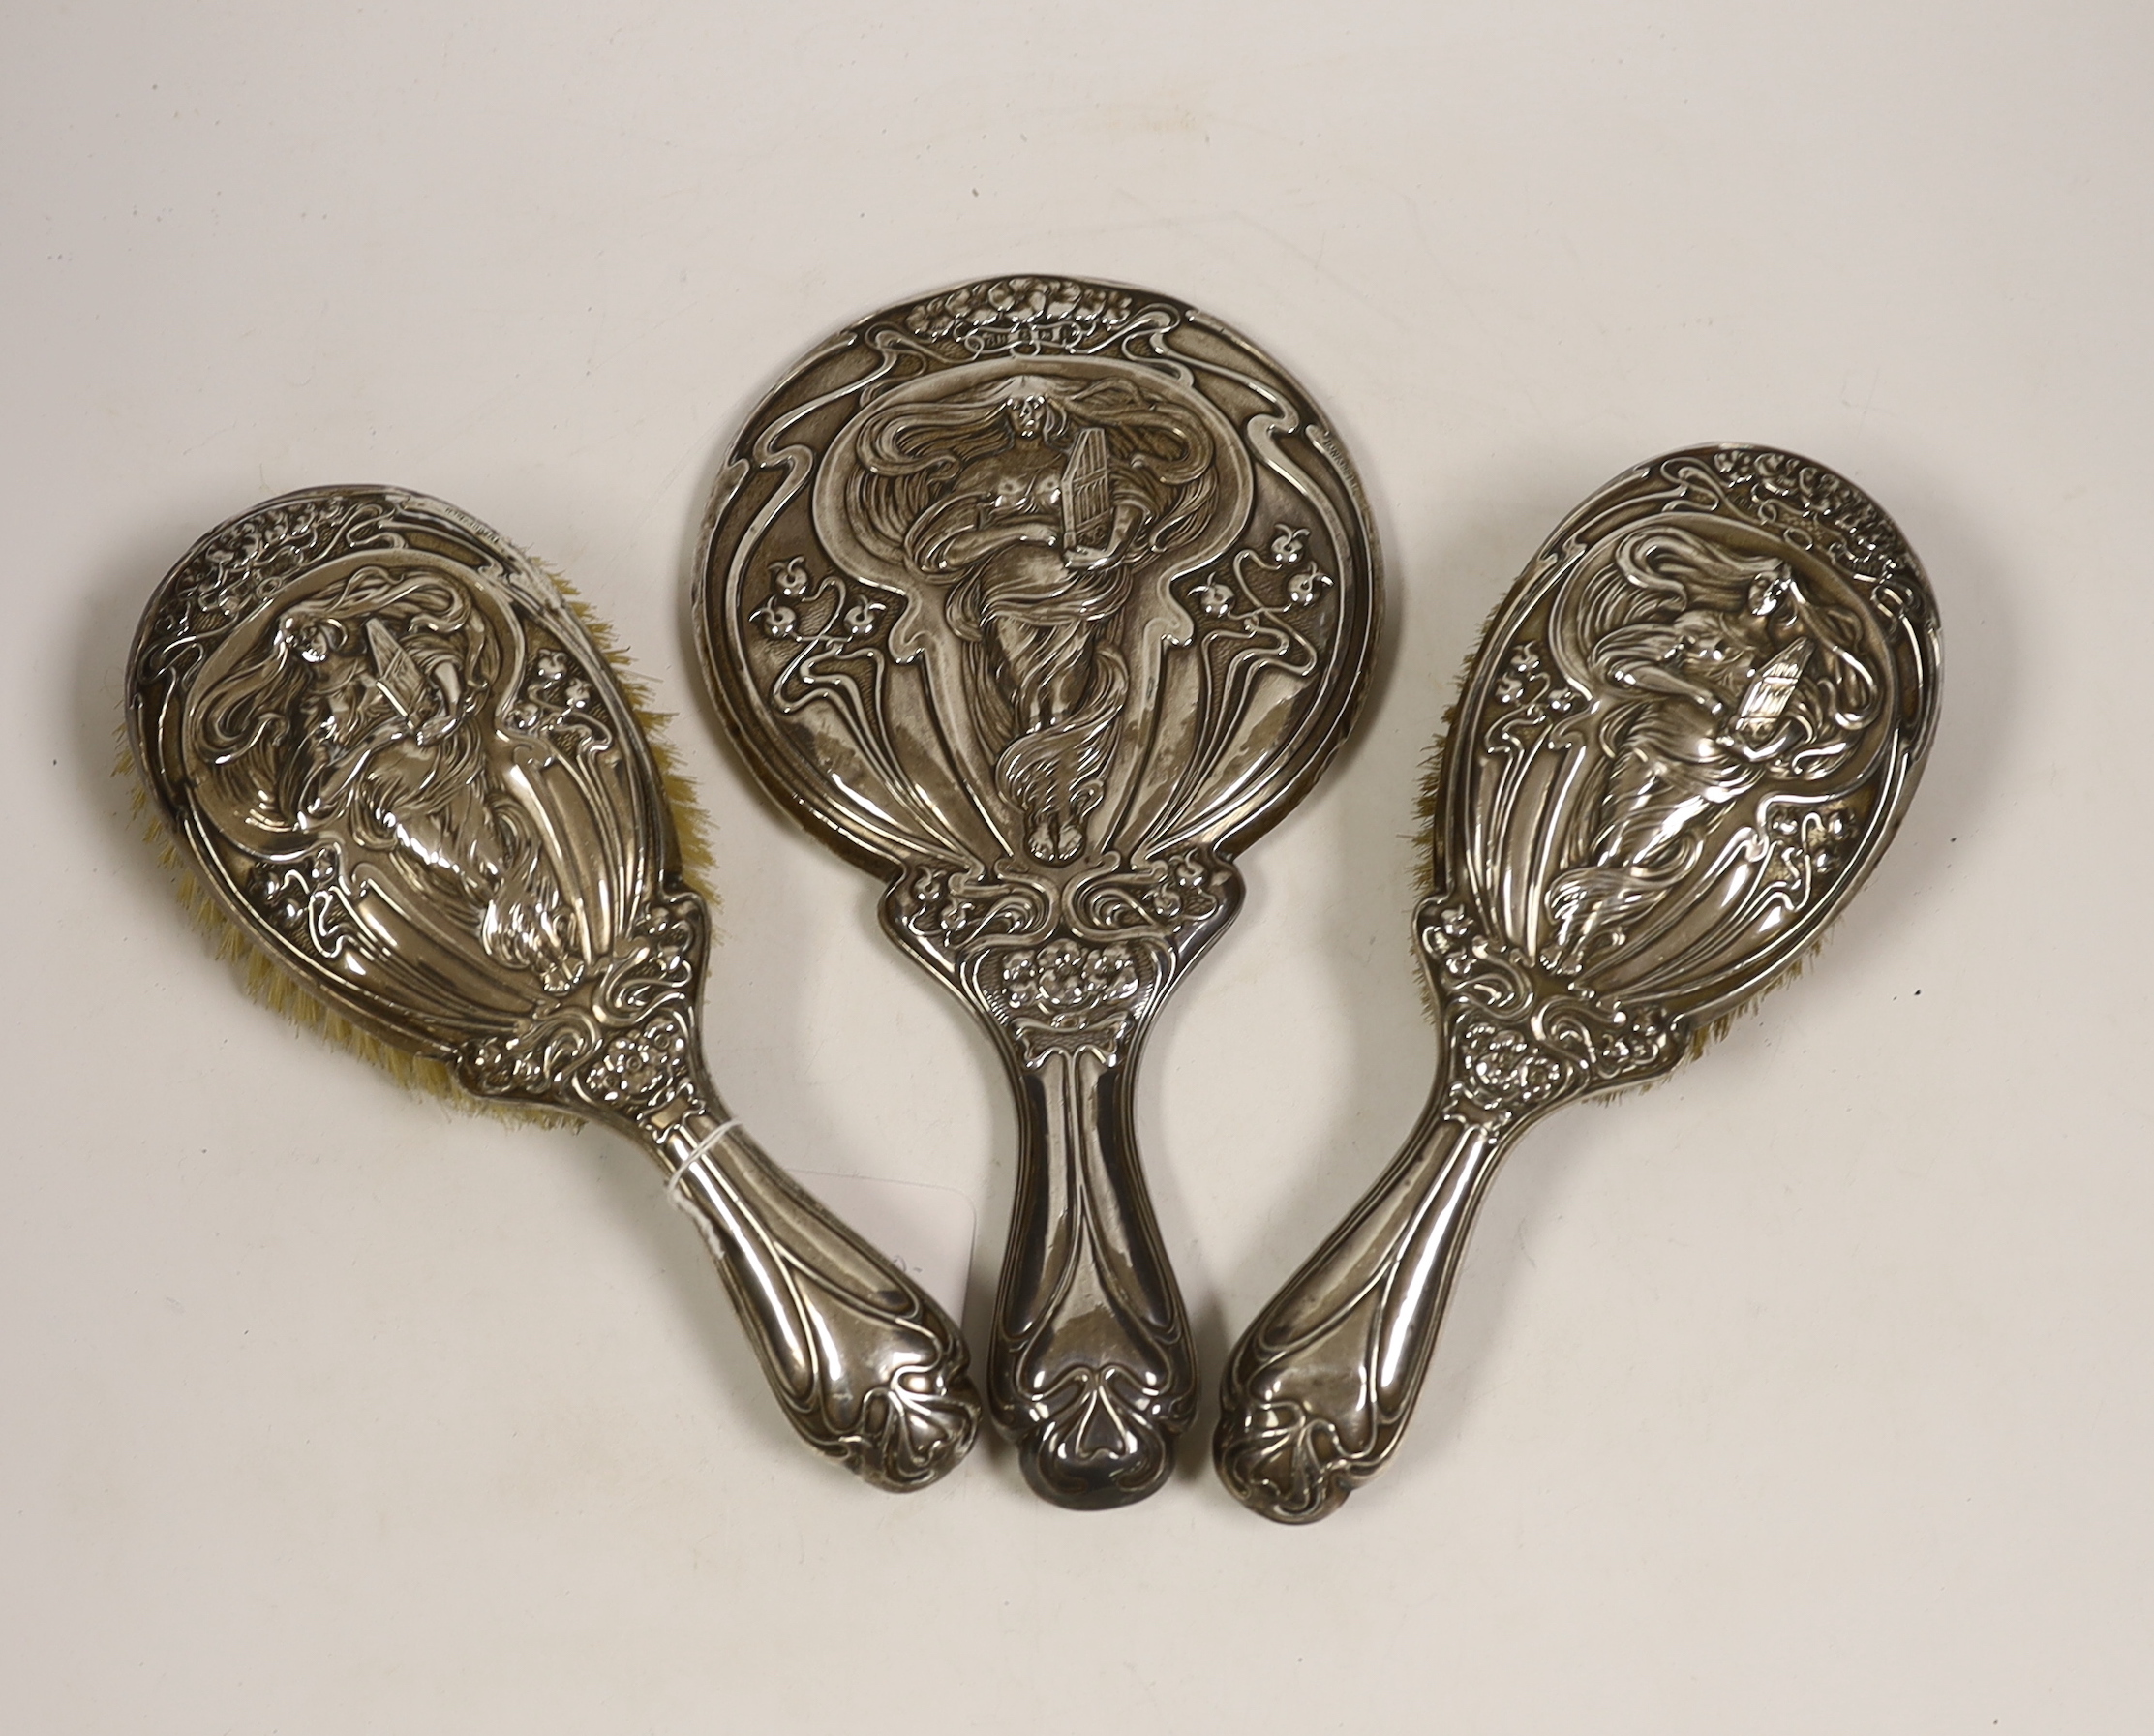 An Edwardian Art Nouveau silver mounted hand mirror and hair brush, maker Charles Horner?, Birmingham, 1906/7 and a similar hair brush, W.G. Keight & Co, Birmingham, 1905.                                                 